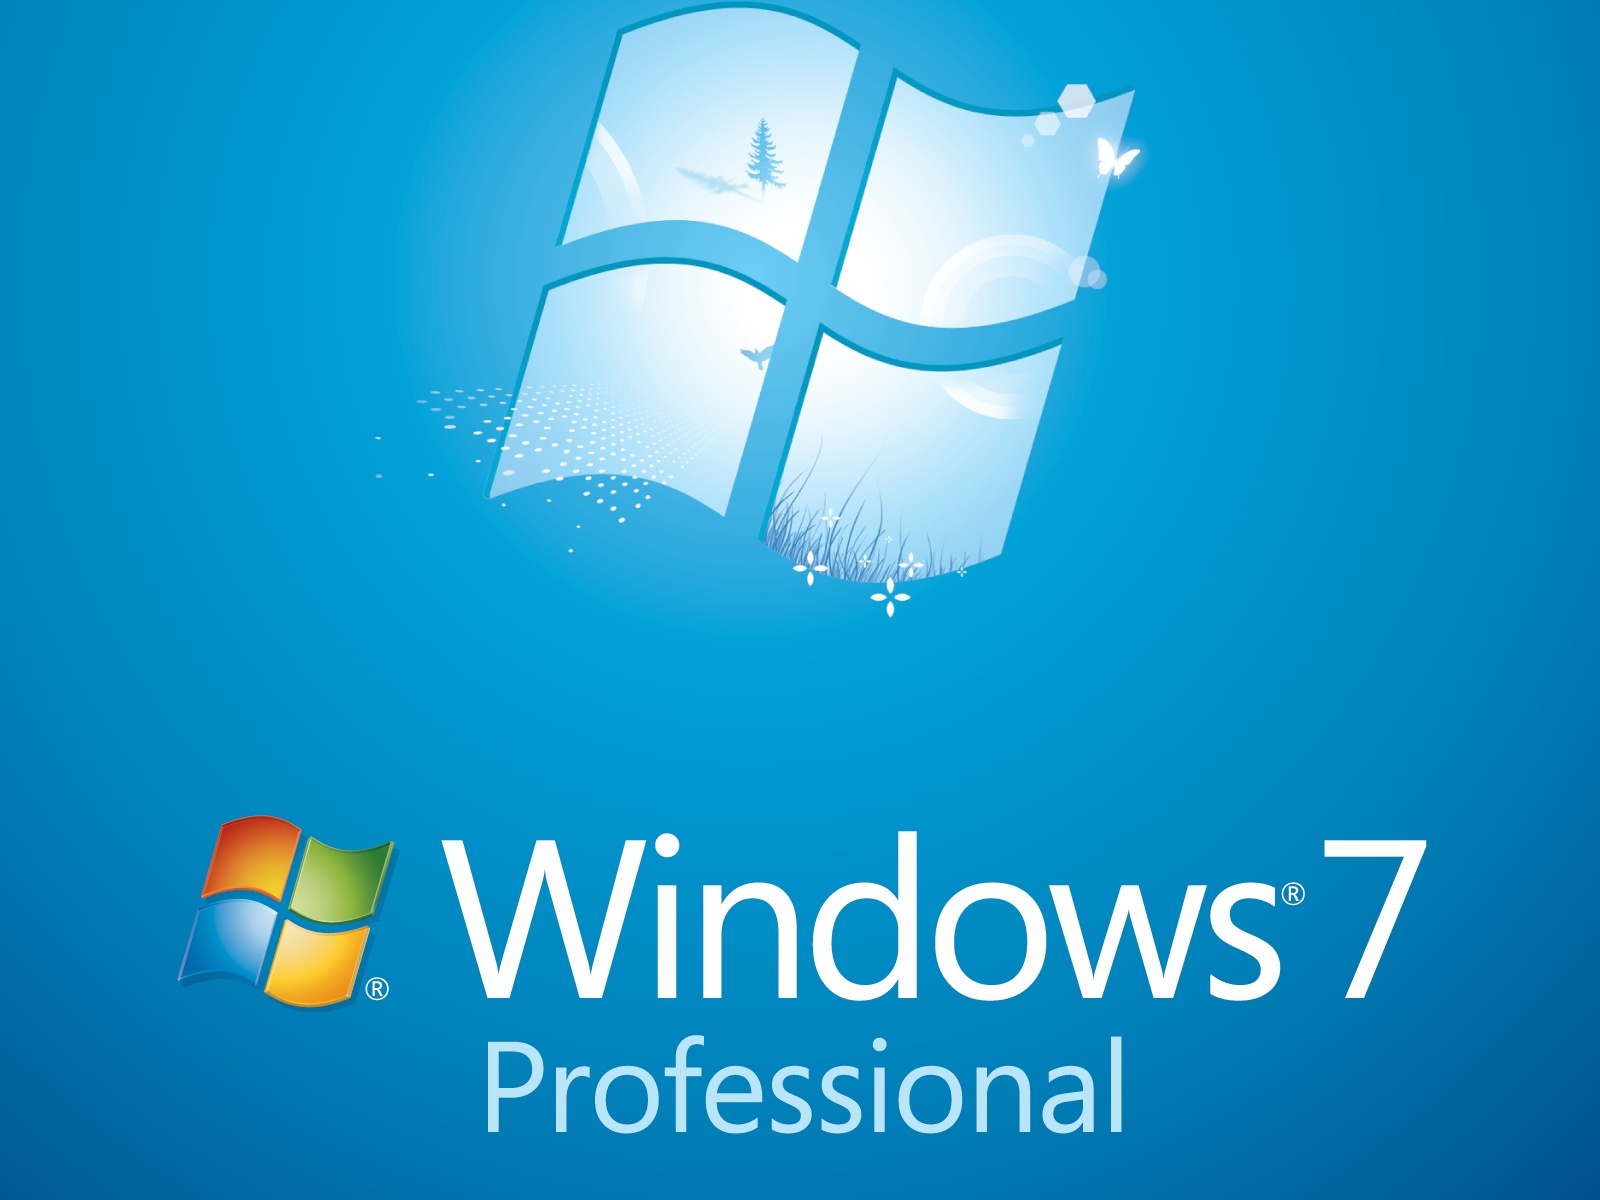 Windows 7 Home Premium - 1600x1200 Wallpaper 